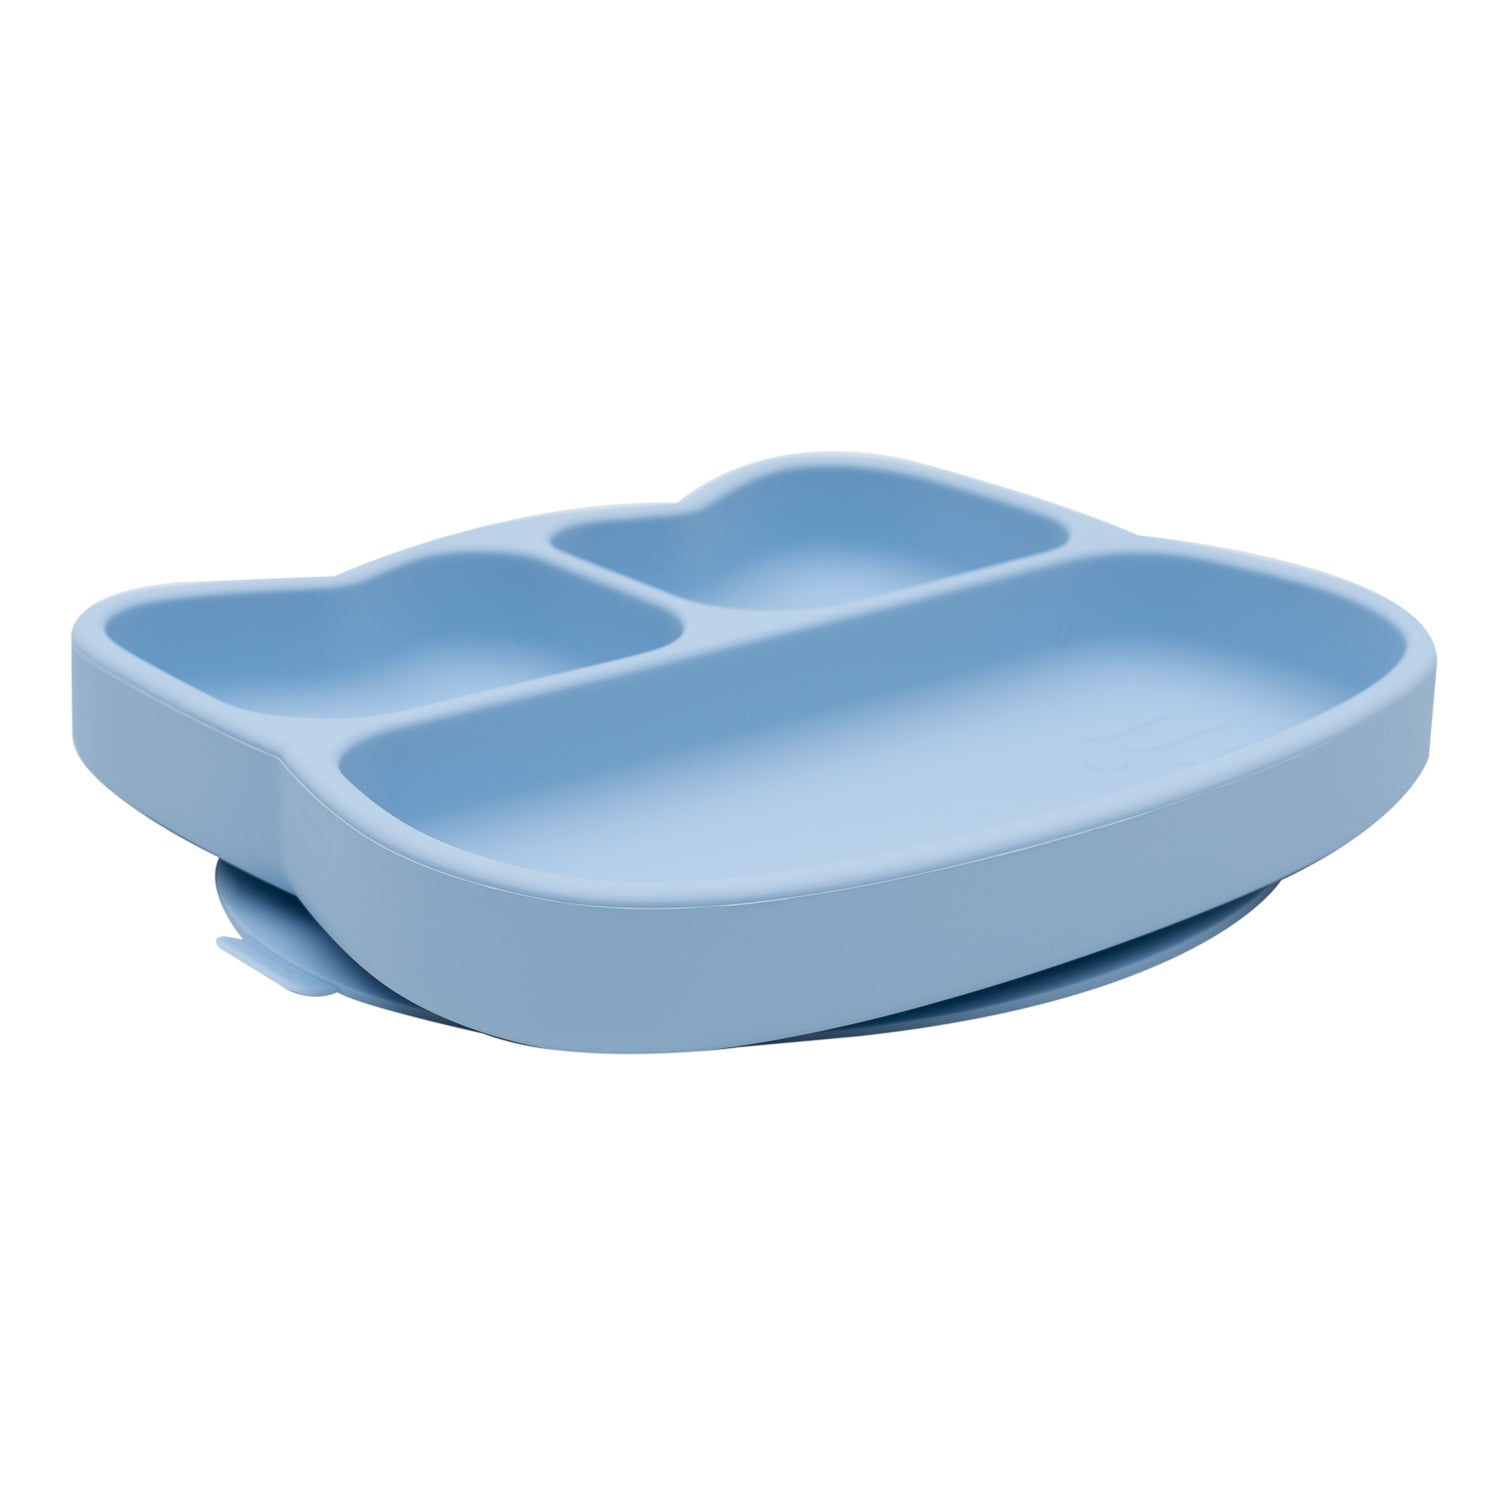 Cat Stickie® Plate - Powder Blue